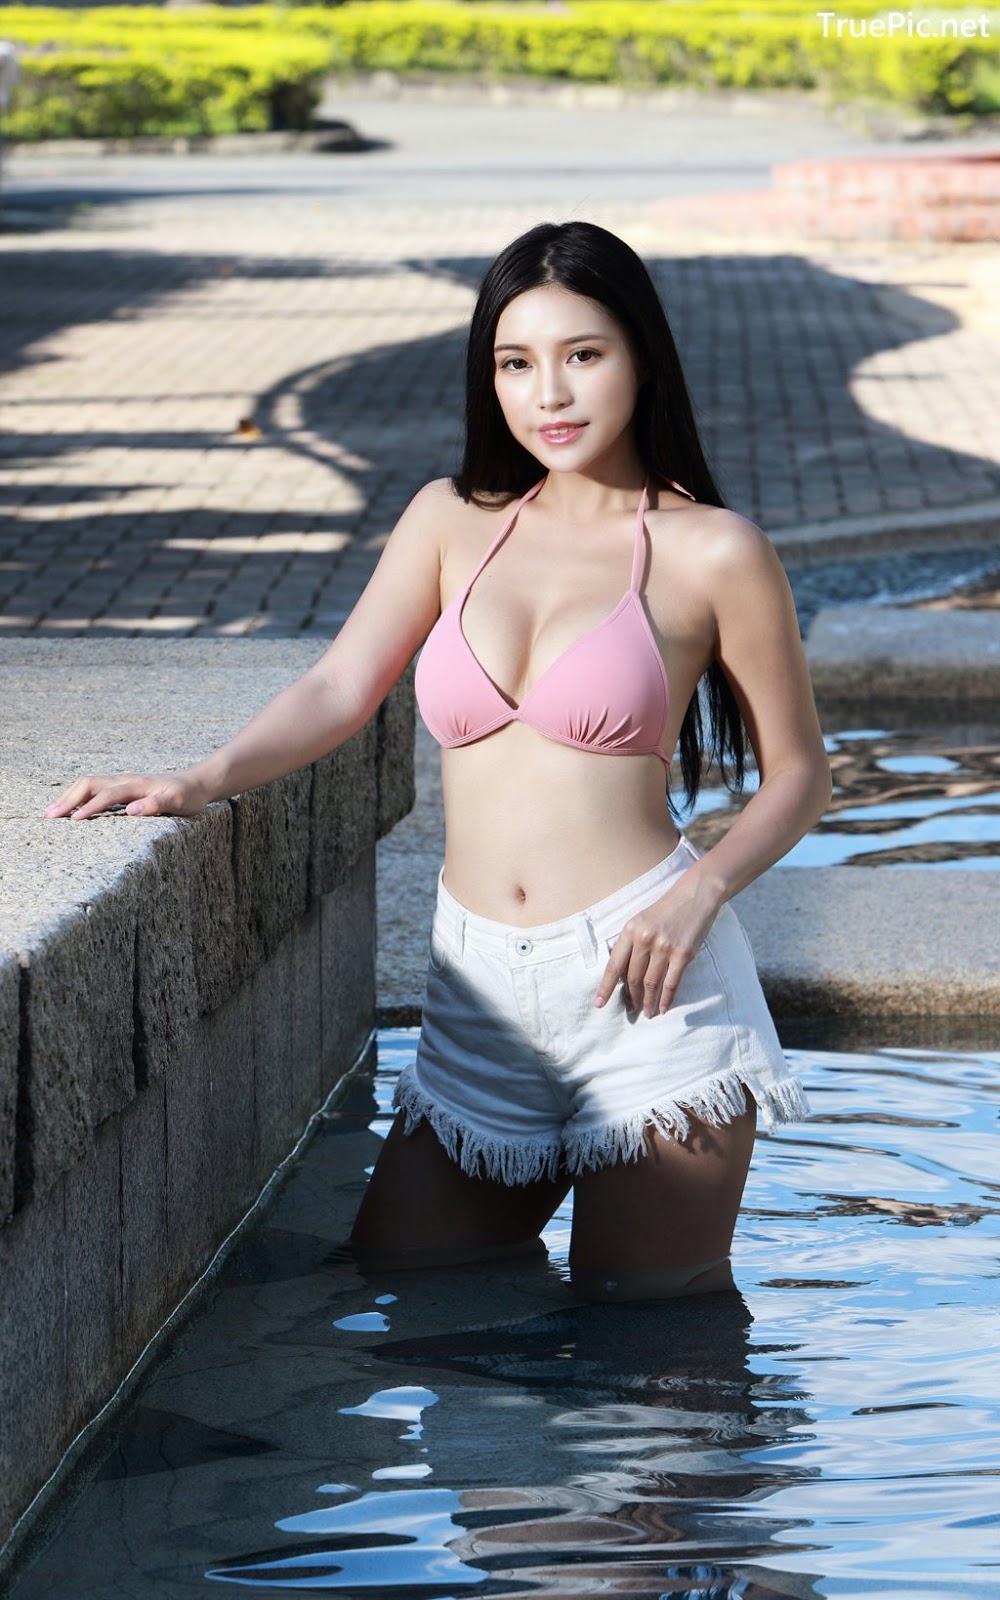 Image-Taiwanese-Model–莊舒潔-ViVi–Hot-Pink-Bikini-Top-and-White-Short-Pants-TruePic.net- Picture-20